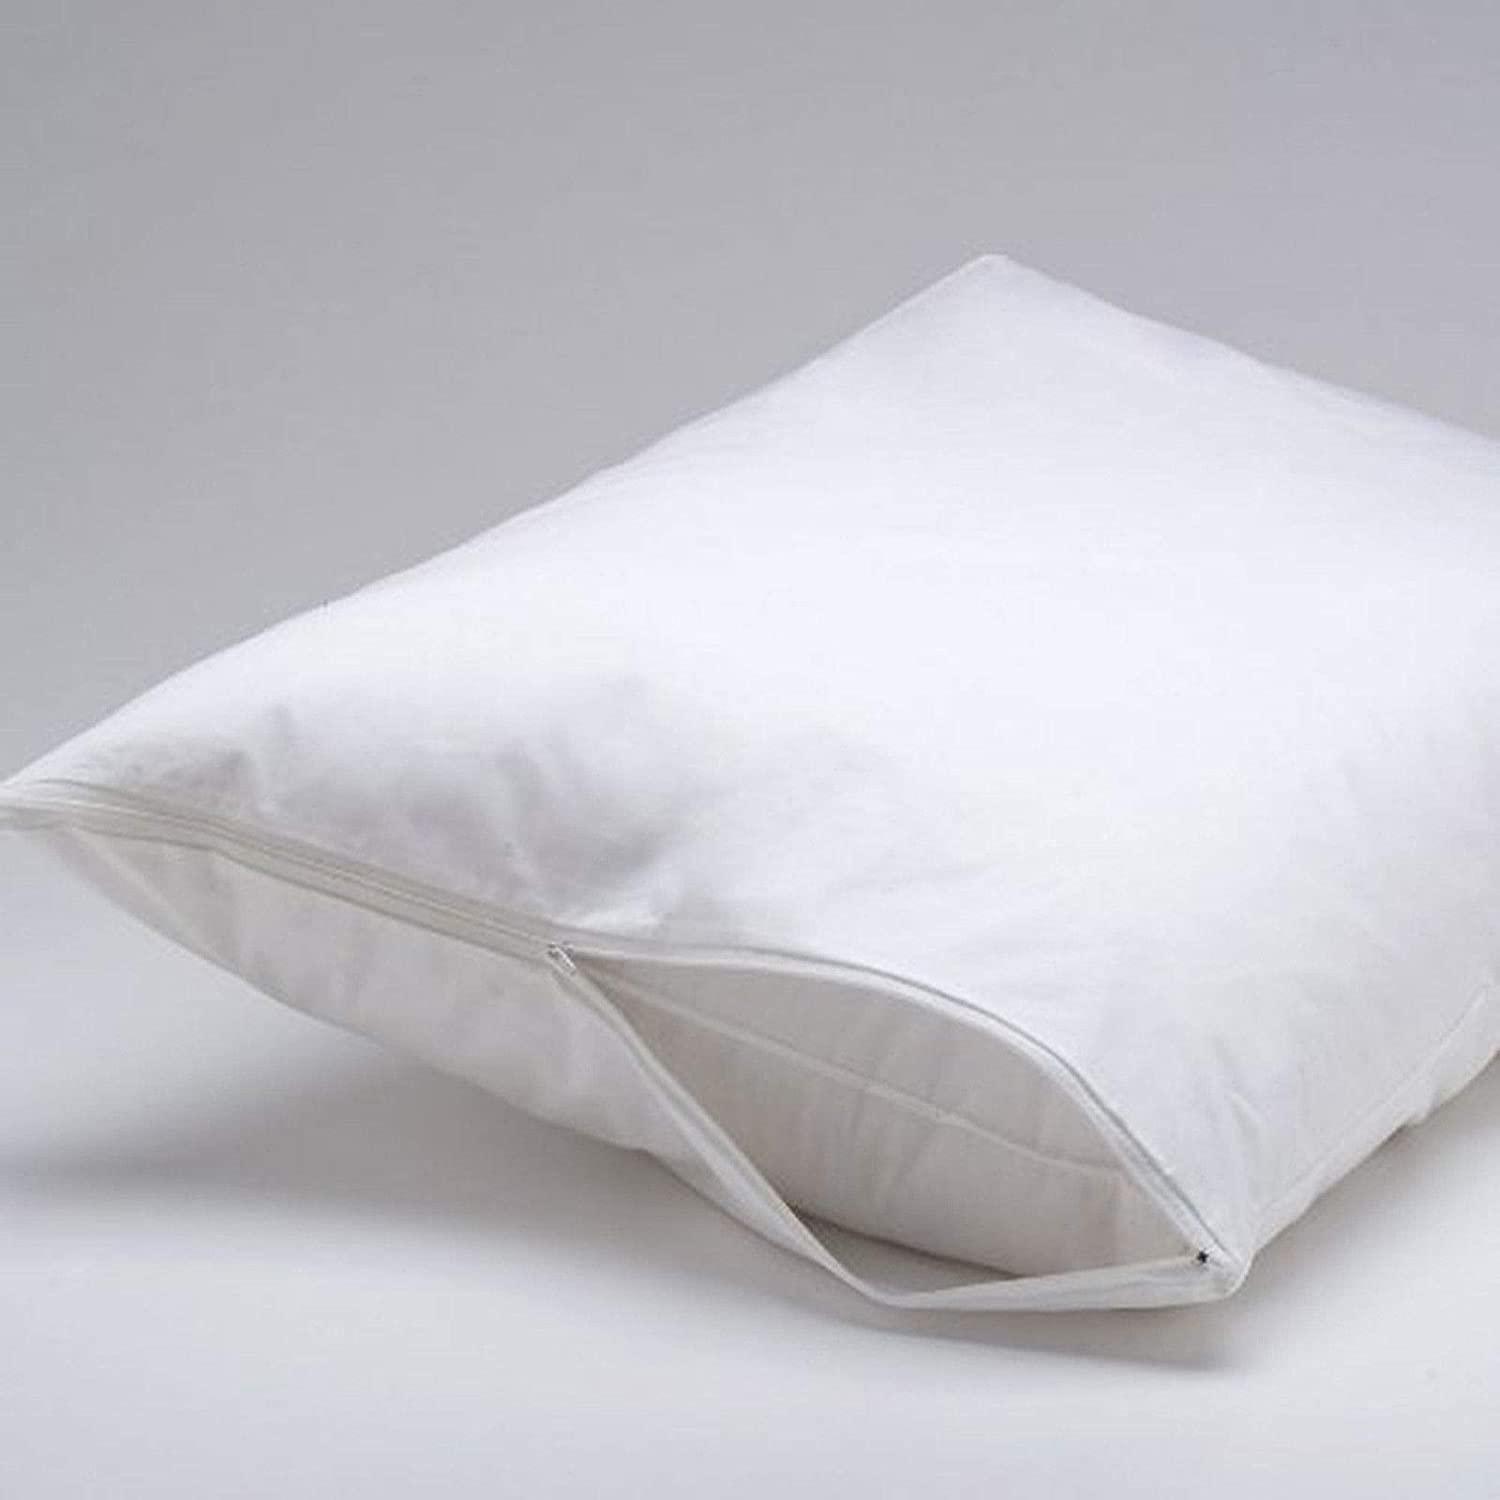 Towel Waterproof Pillow Protector - sinnohome 